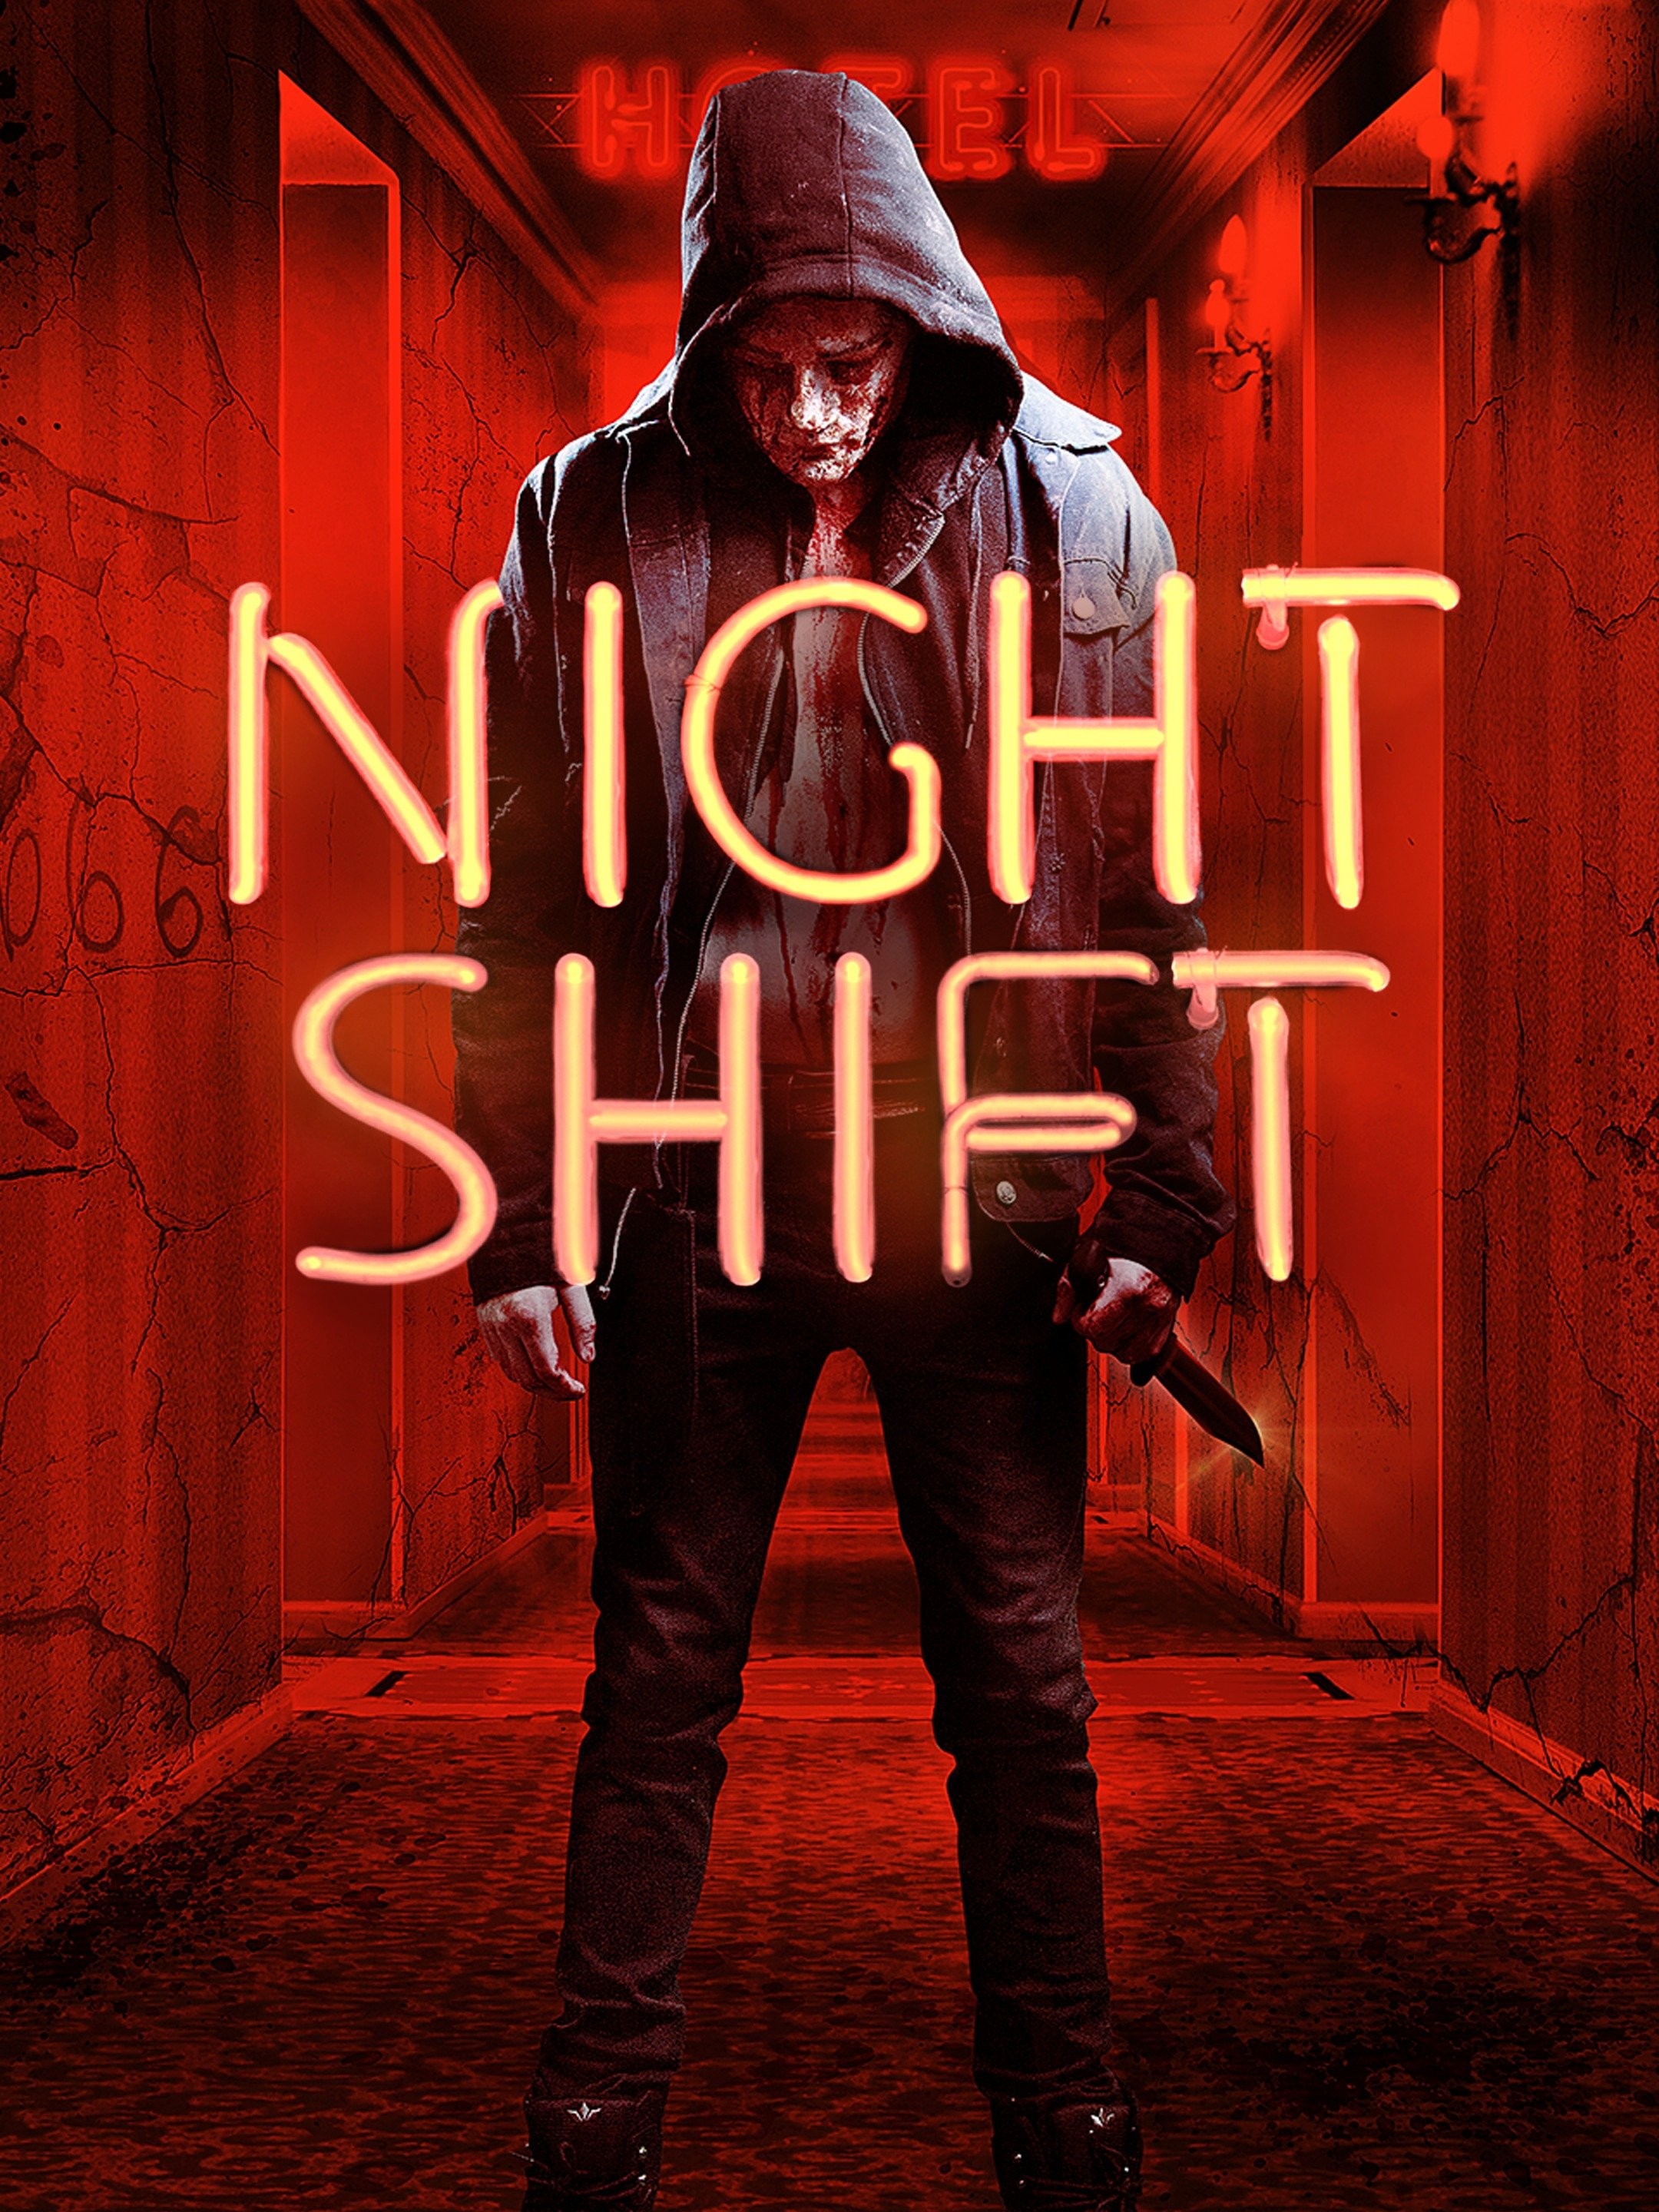 The Night Shift - Rotten Tomatoes